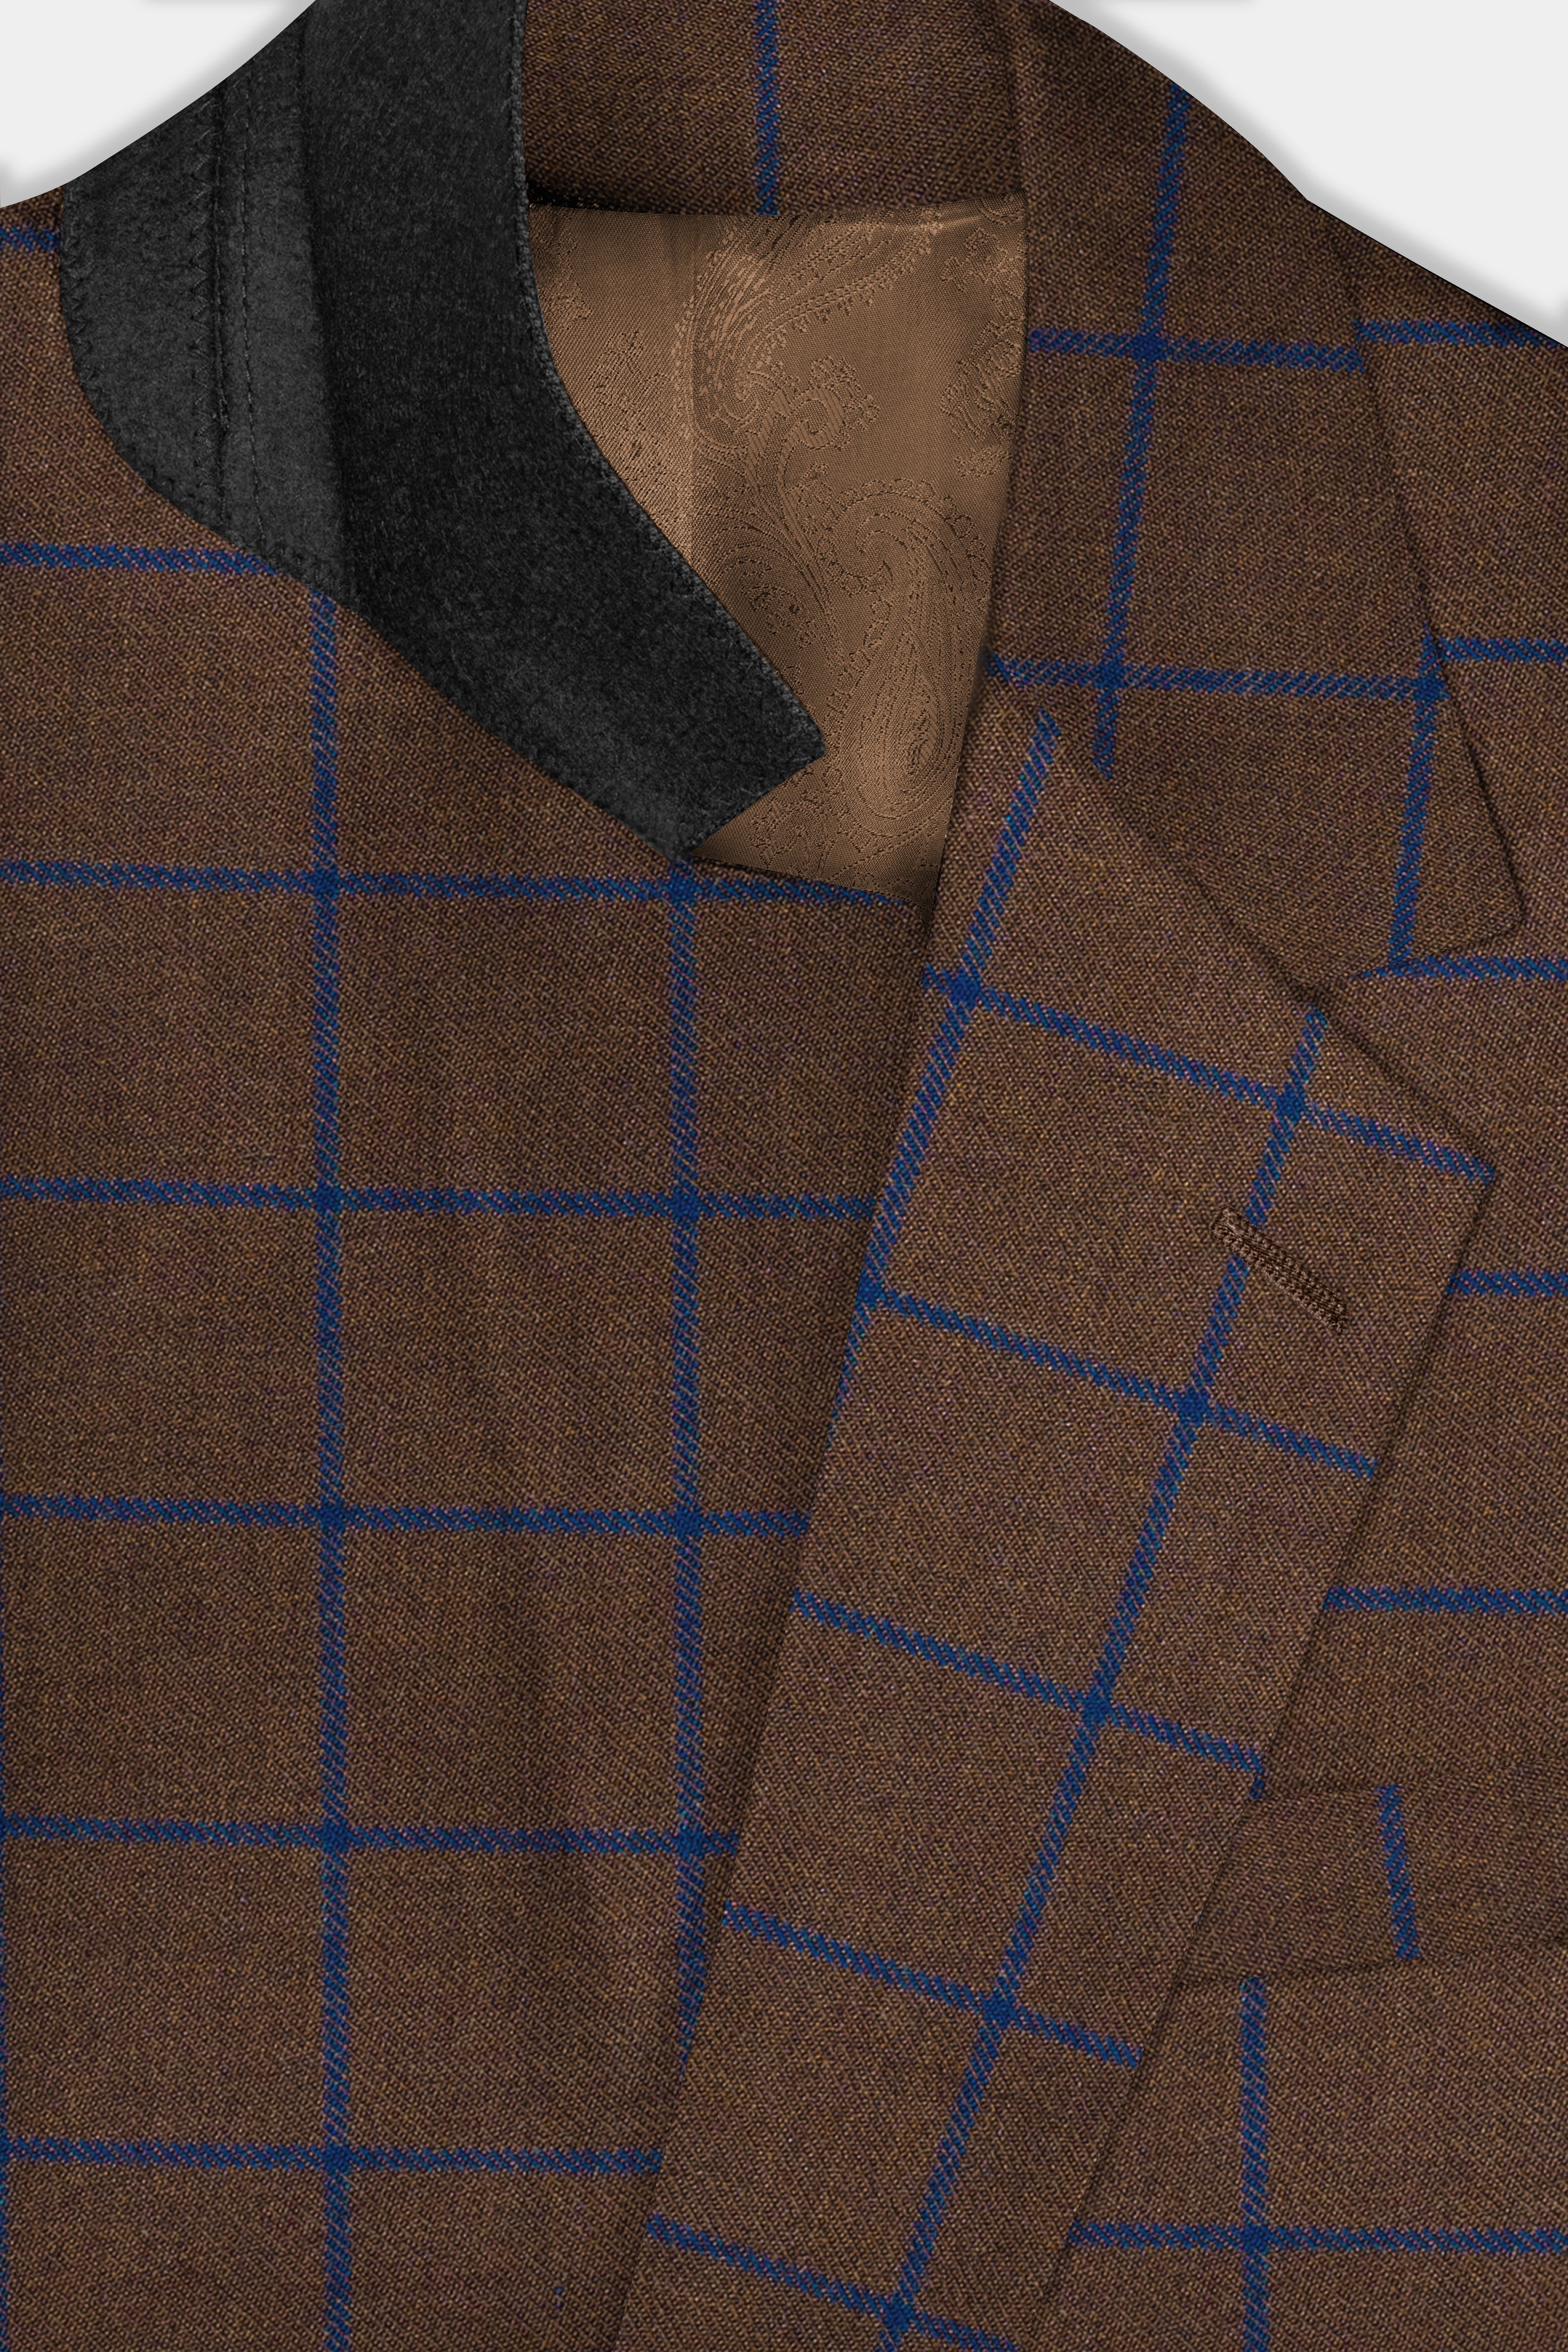 Bistre Brown with Catalina Blue Windowpane Tweed Blazer